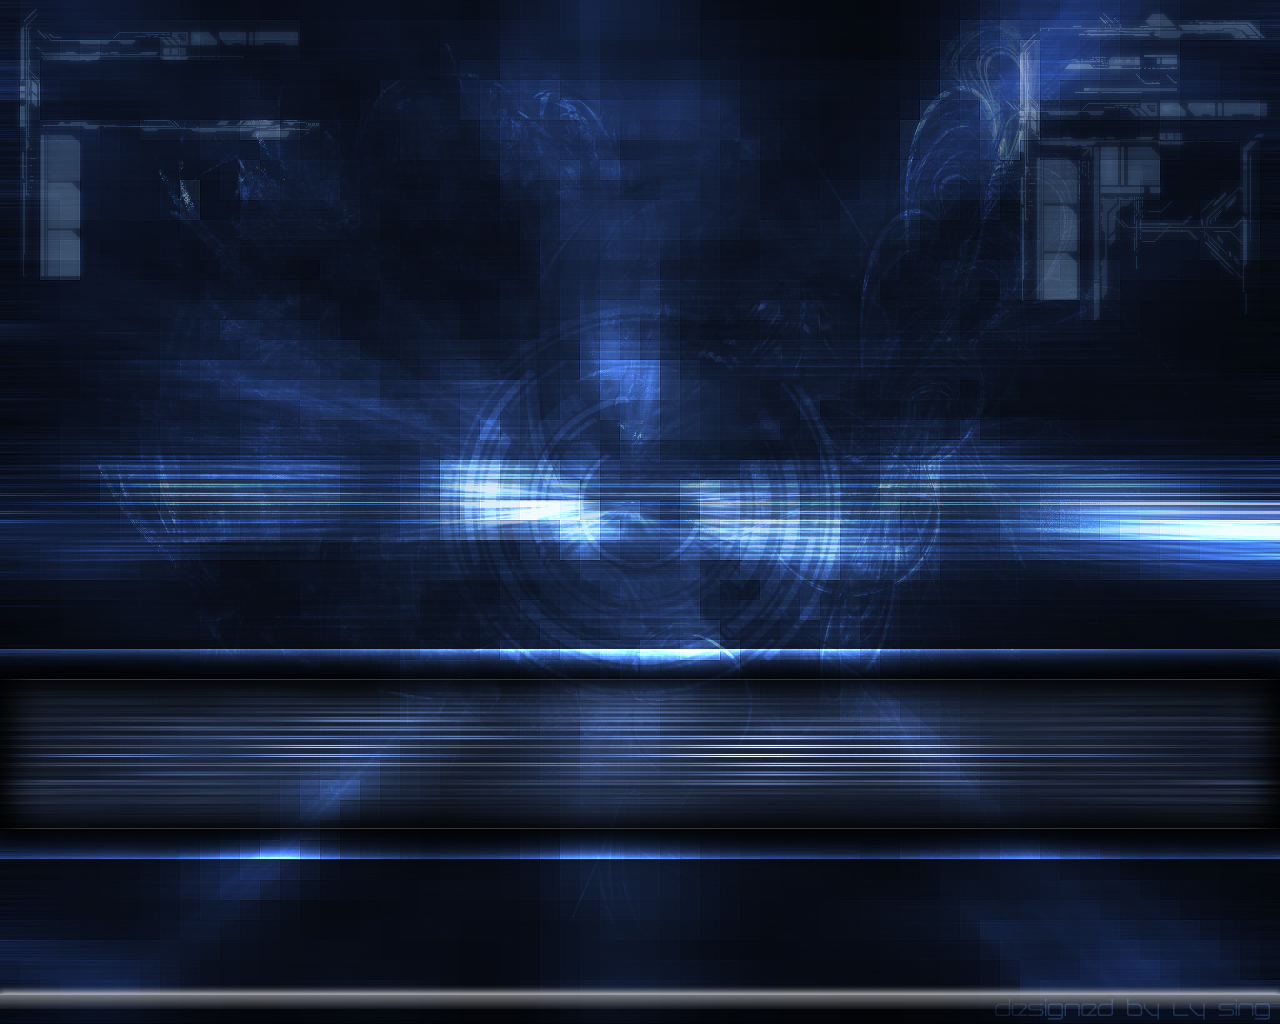 Blue Techno Background